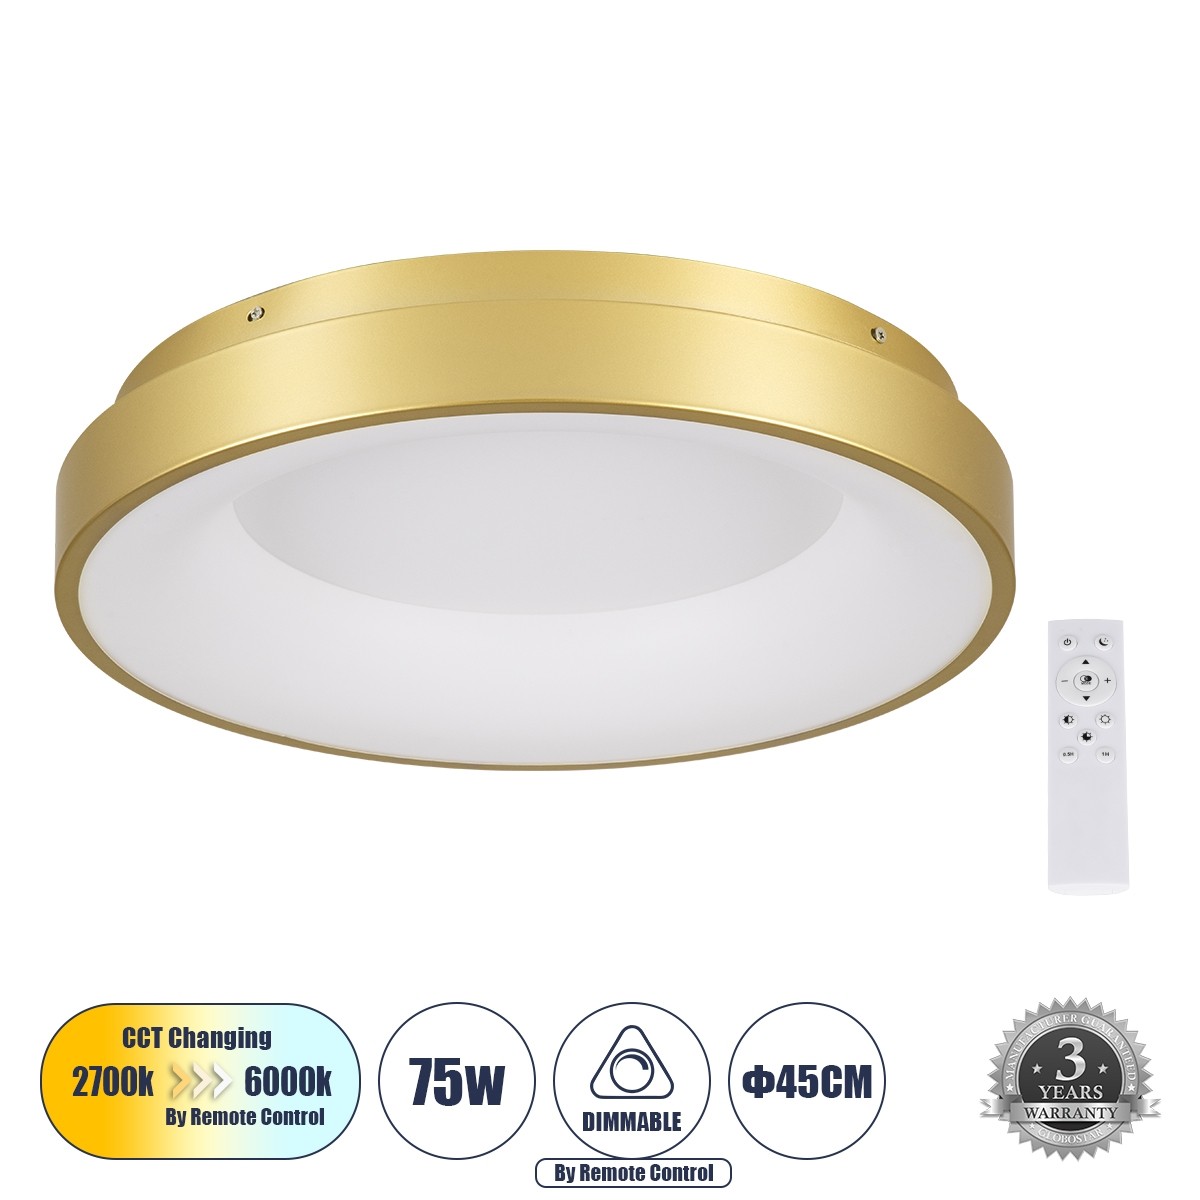 LED Πλαφονιέρα Οροφής SALEM 75W με Εναλλαγή Φωτισμού Dimmable Φ45cm - Χρυσό Σαμπανιζέ 61235